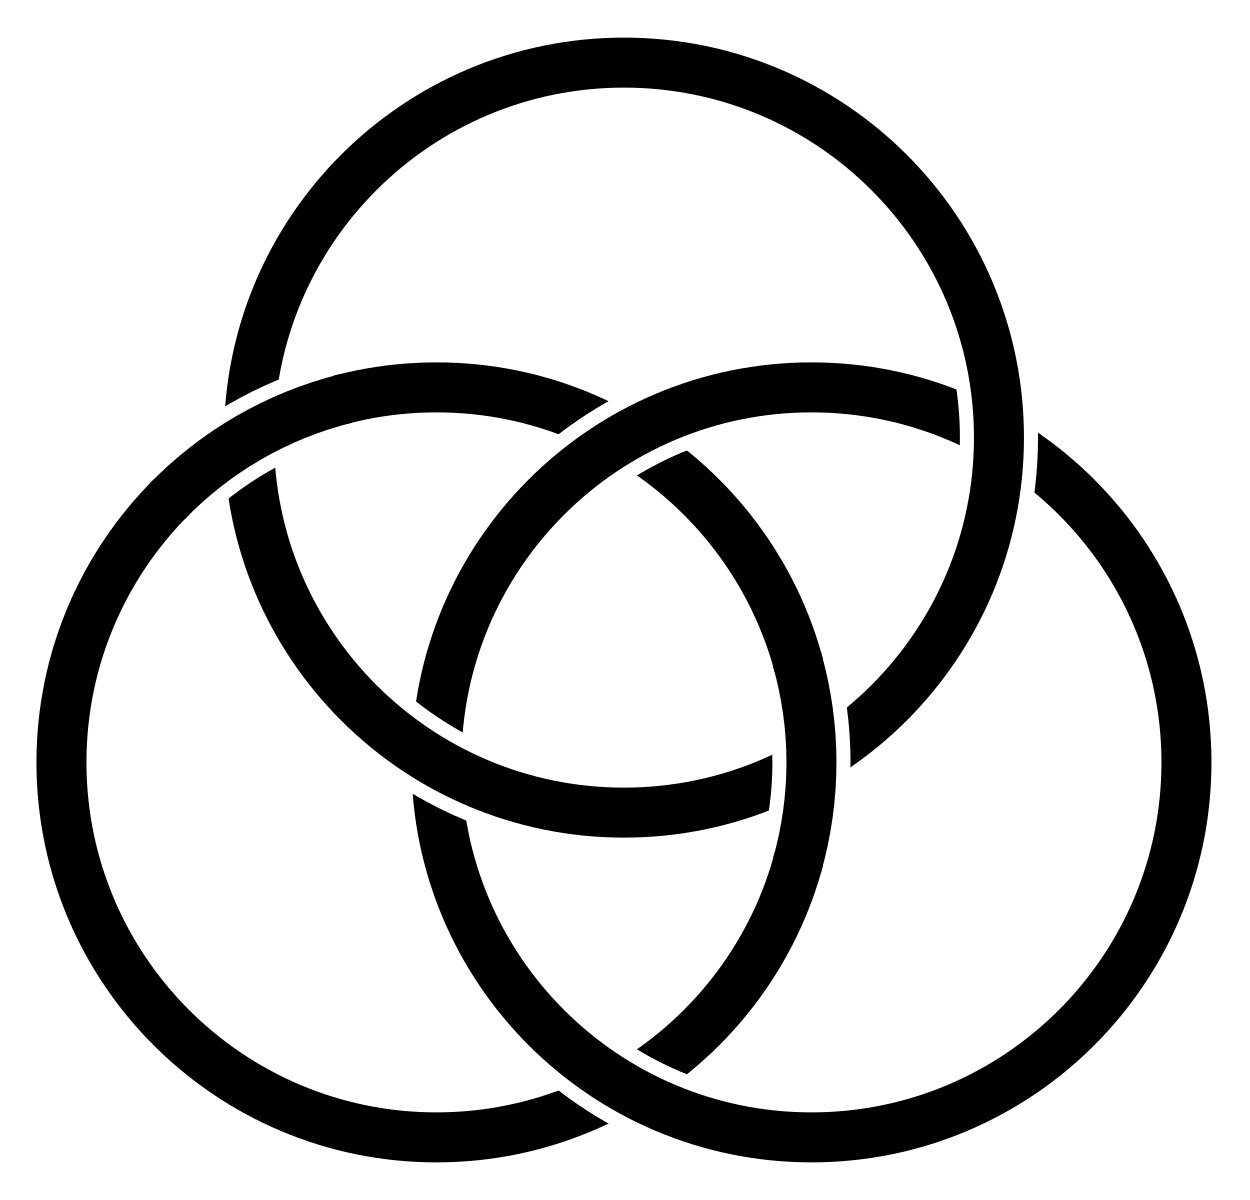 Кольца Борромео Лакан. Кольца Борромео символ. Кельтский символ Трикветра. Кольца Борромео из 4 колец.